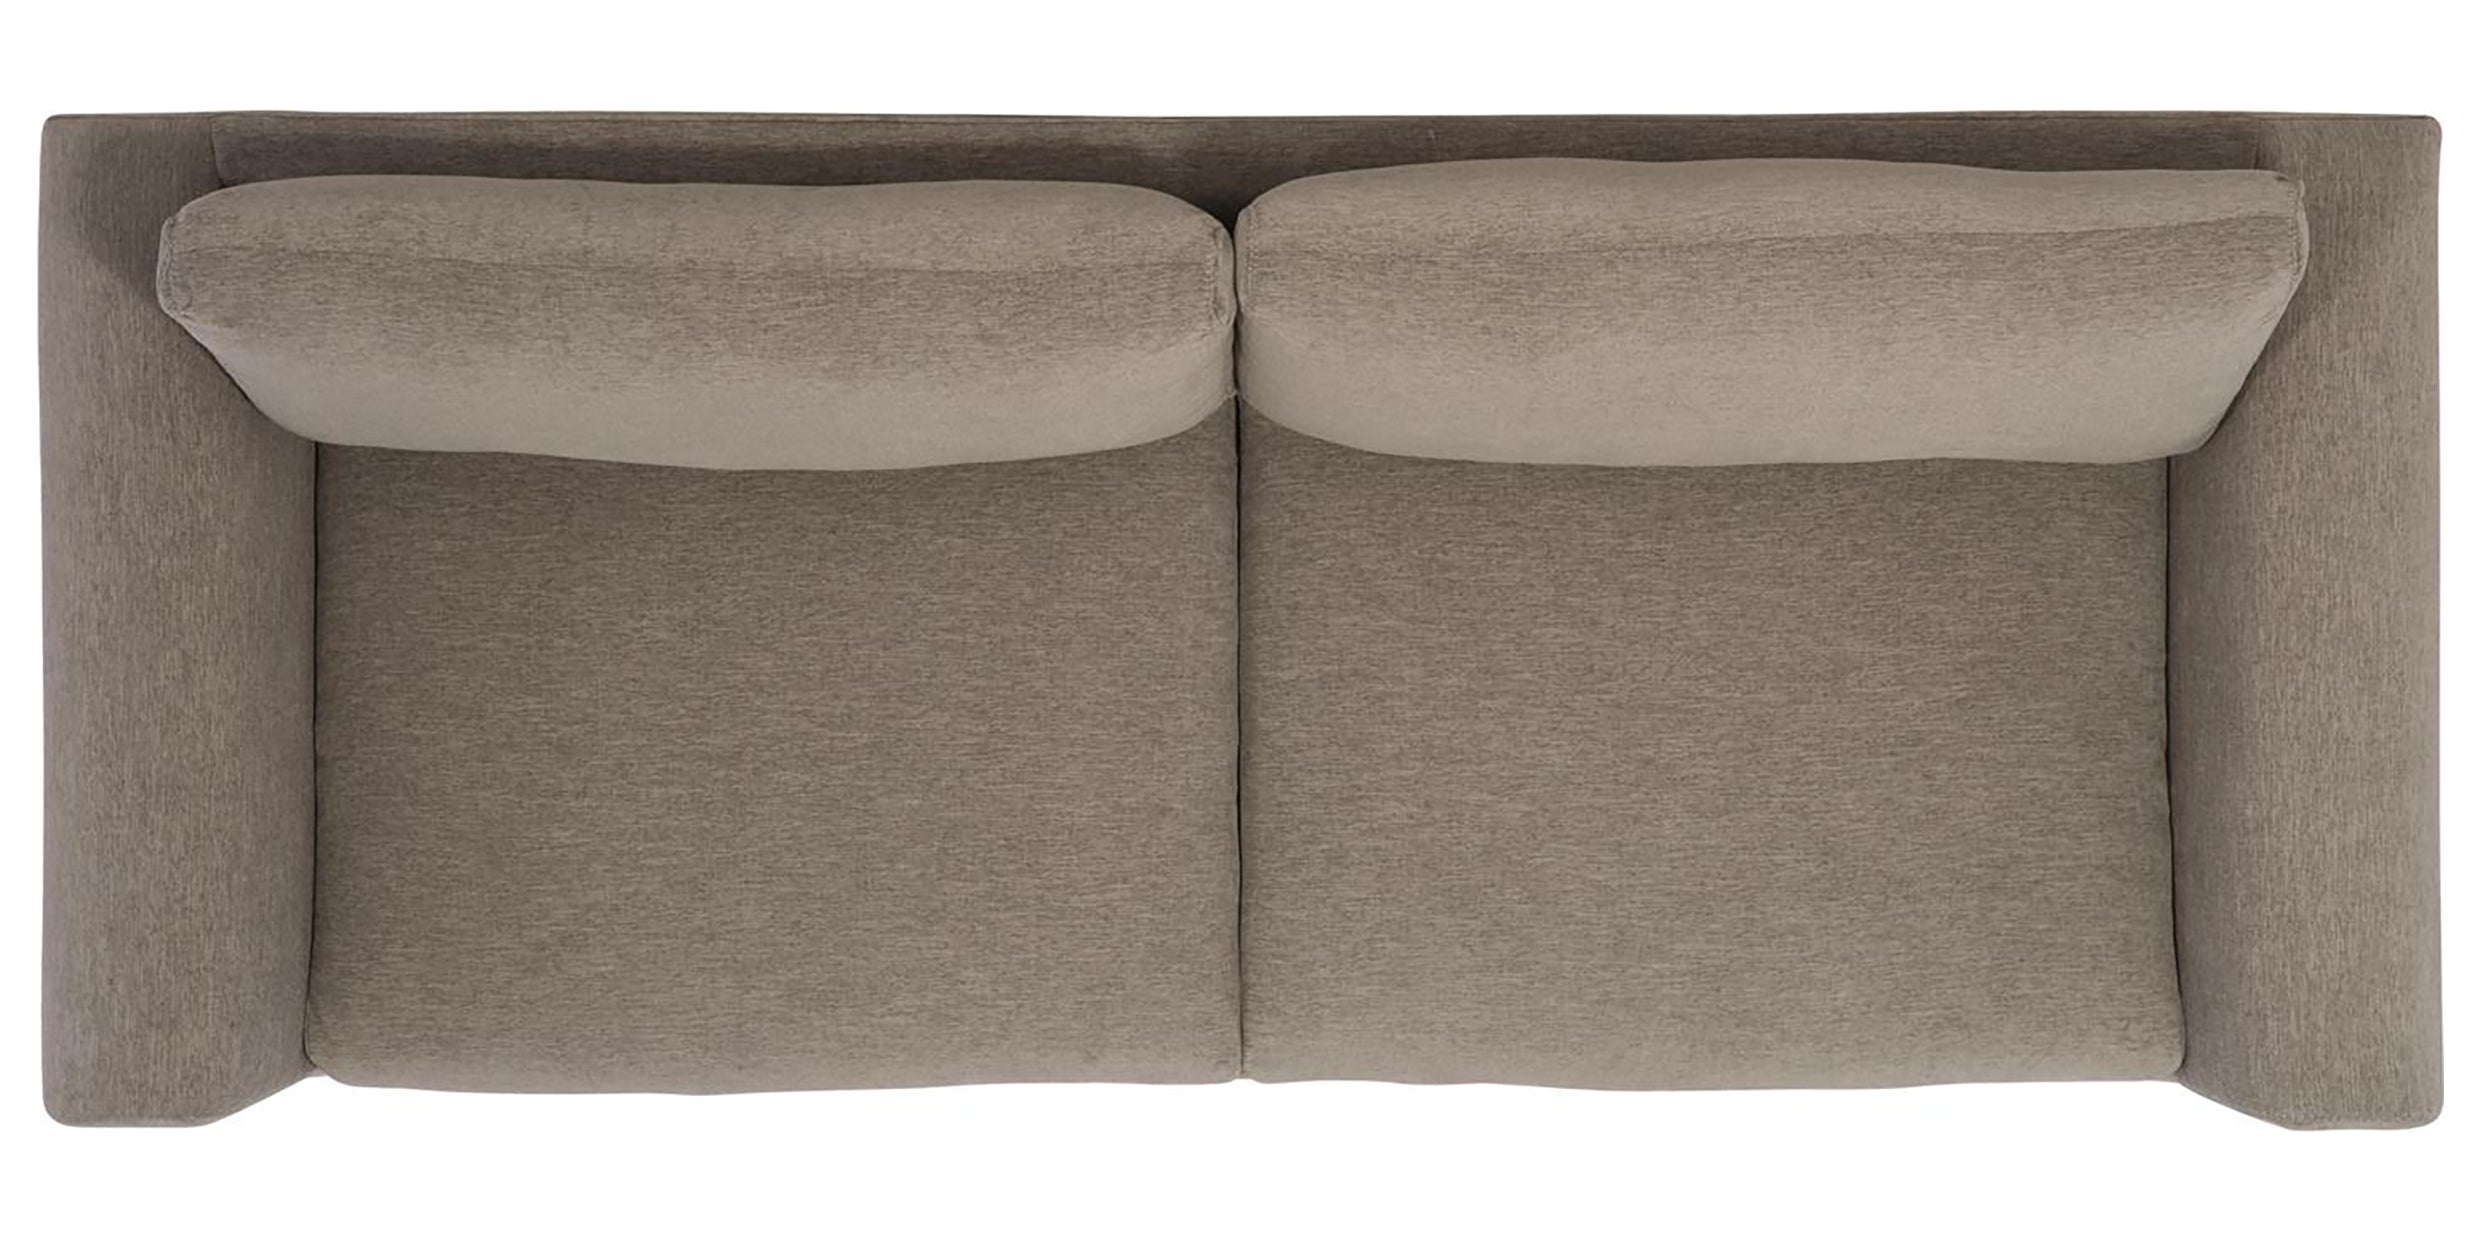 1032-021 Fabric with T0412 Decorative Thread | Bernhardt Remi Fabric Sofa | Valley Ridge Furniture